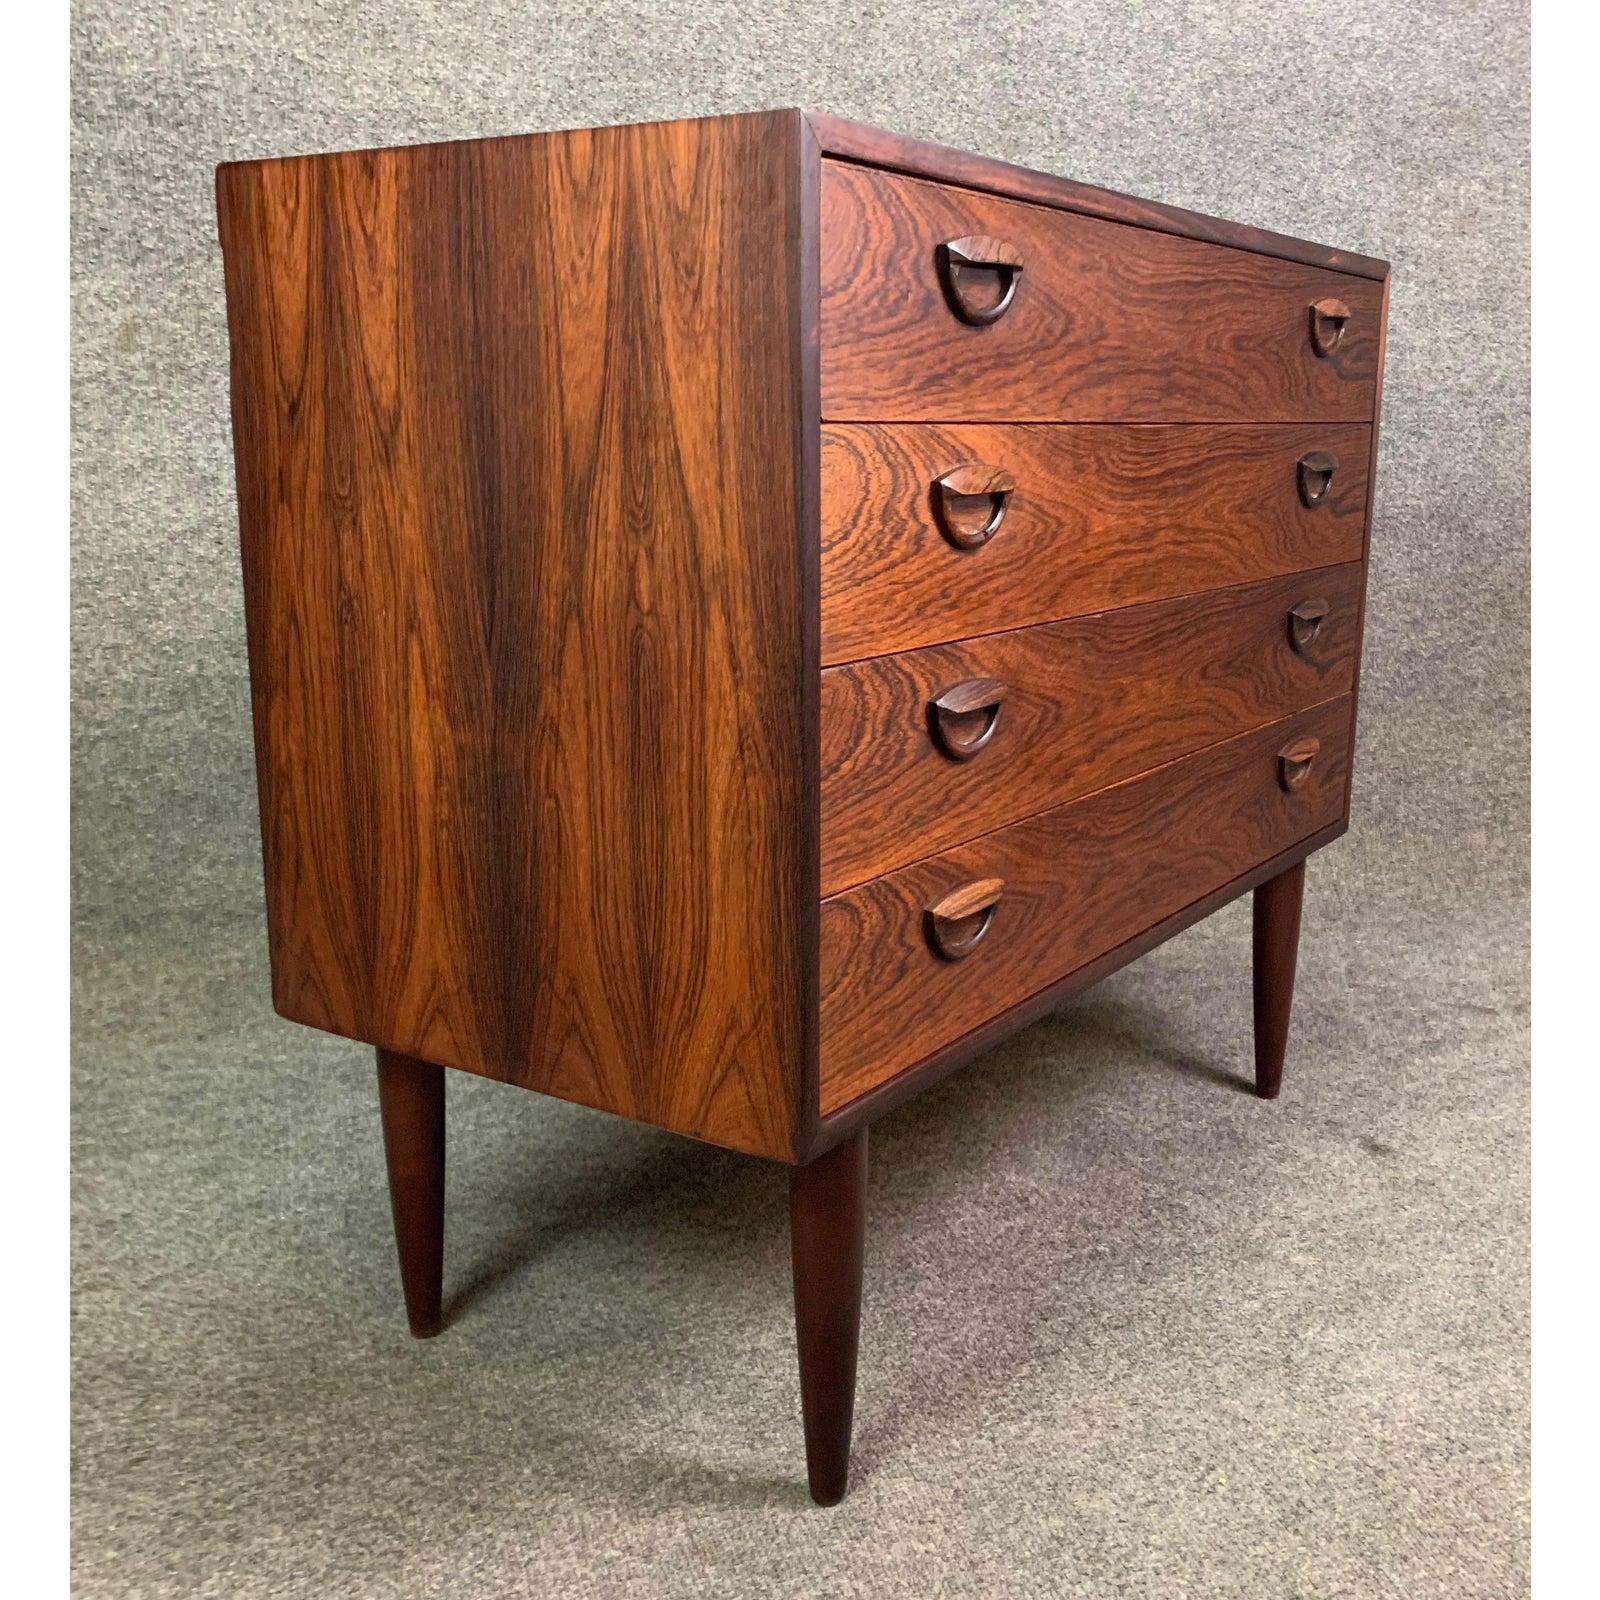 Mid-20th Century Vintage Danish Midcentury Rosewood Chest of Drawers Dresser by Kai Kristiansen